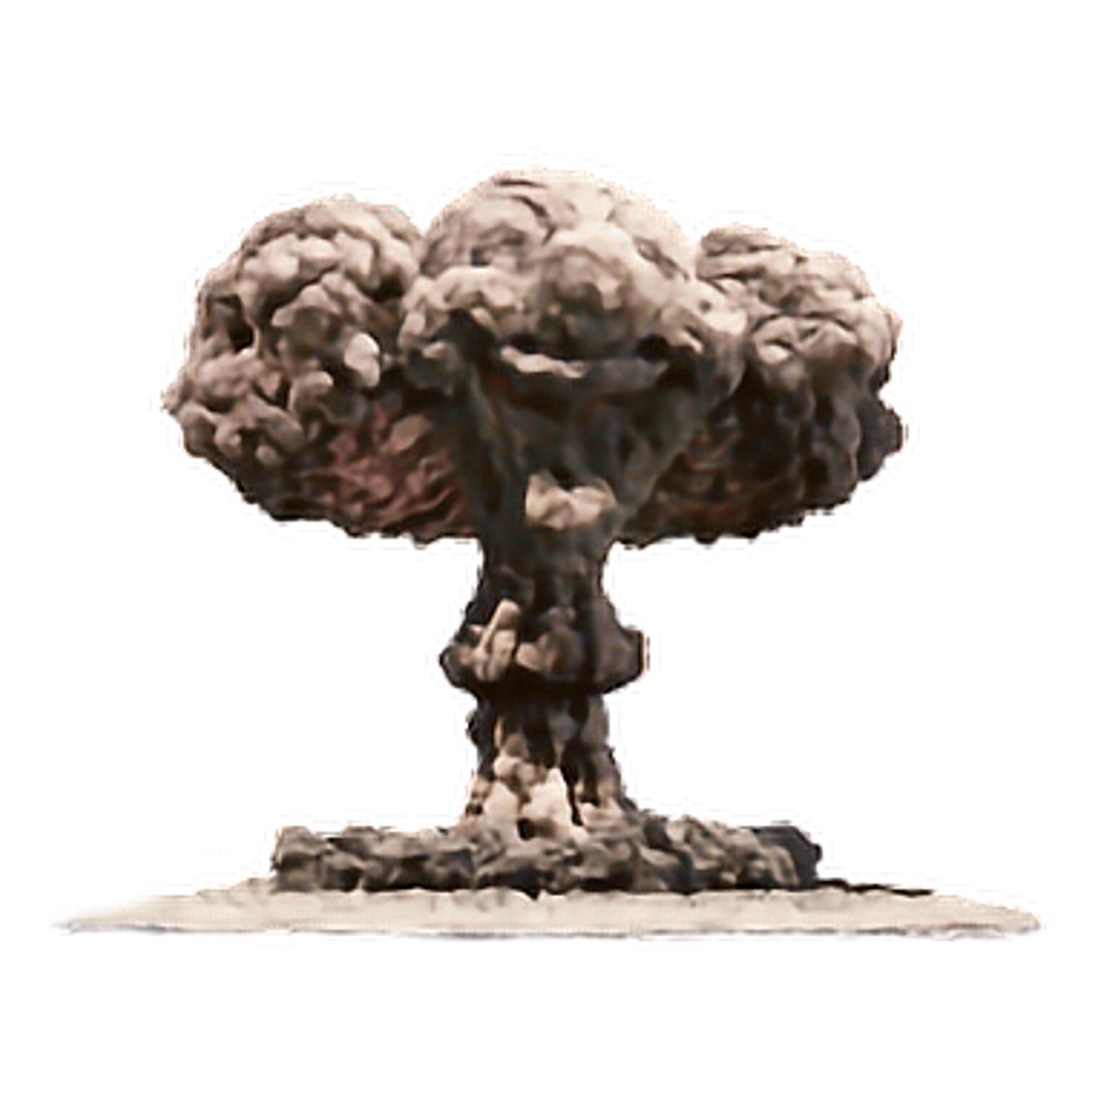 Nuclear Explosion Transparent Image